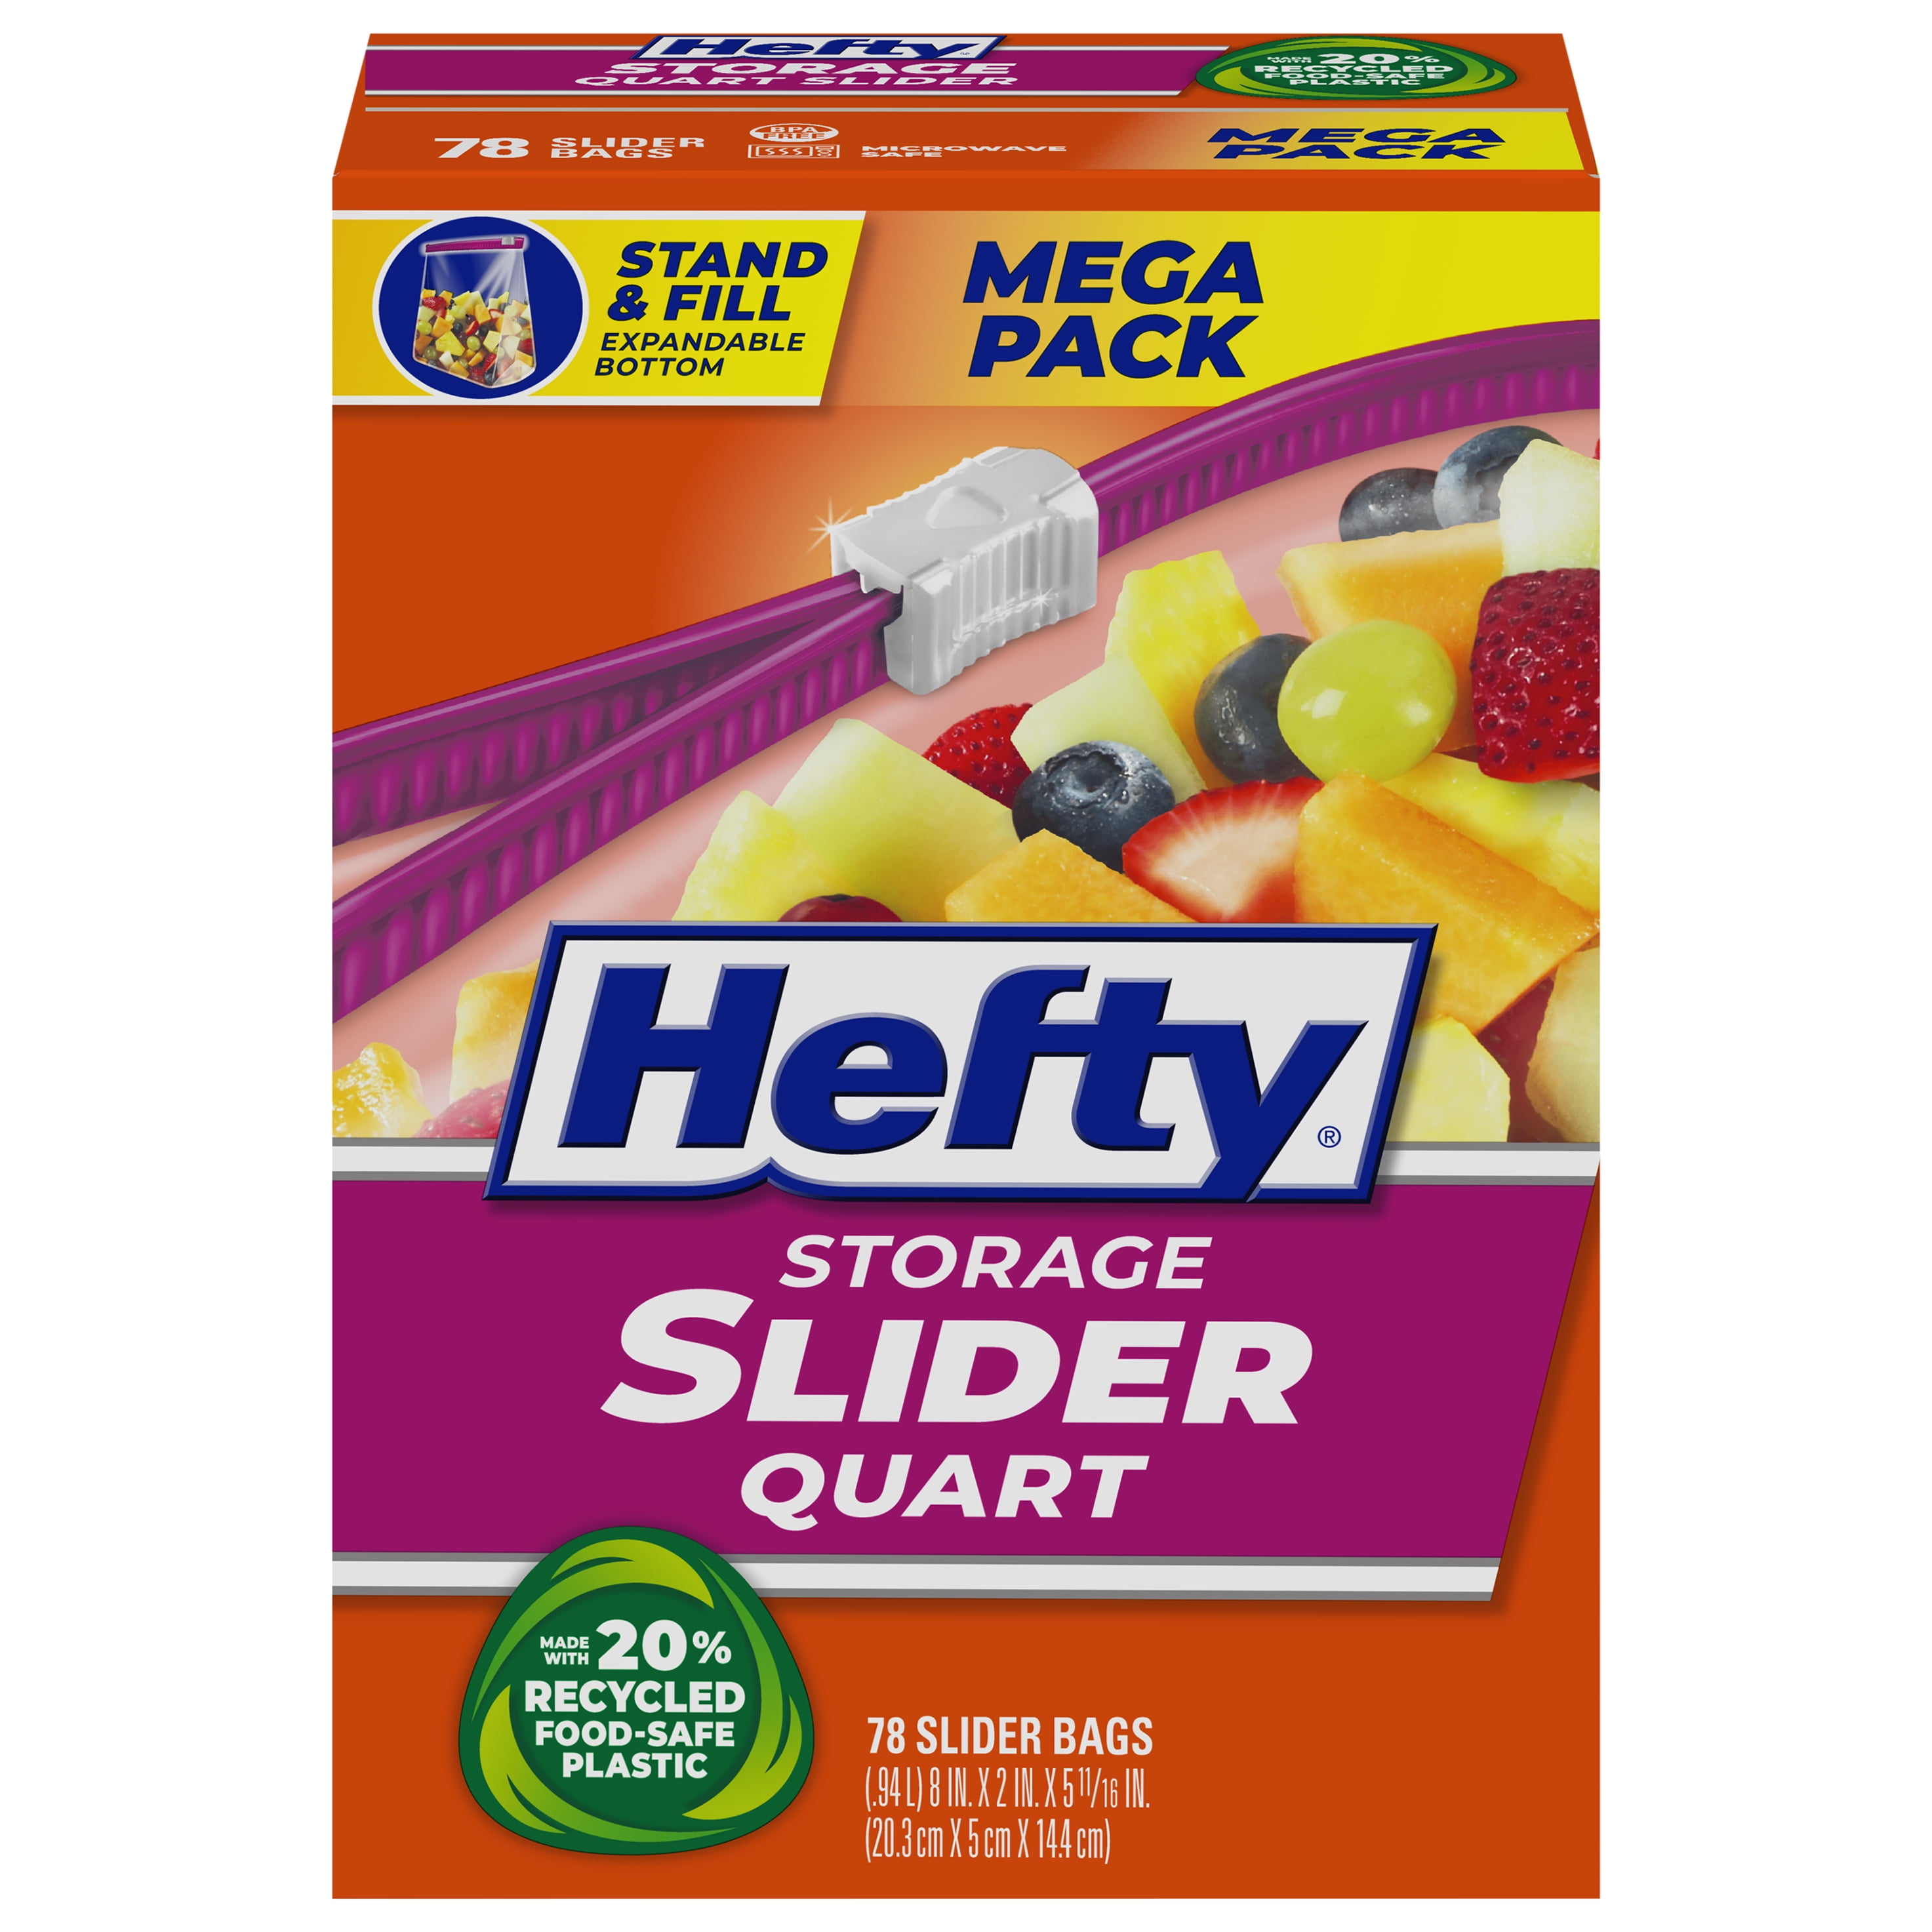 Hefty Slider Freezer Calendar Bags, Quart size, 140 ct – as low as $9.34,  just 6 cents a bag